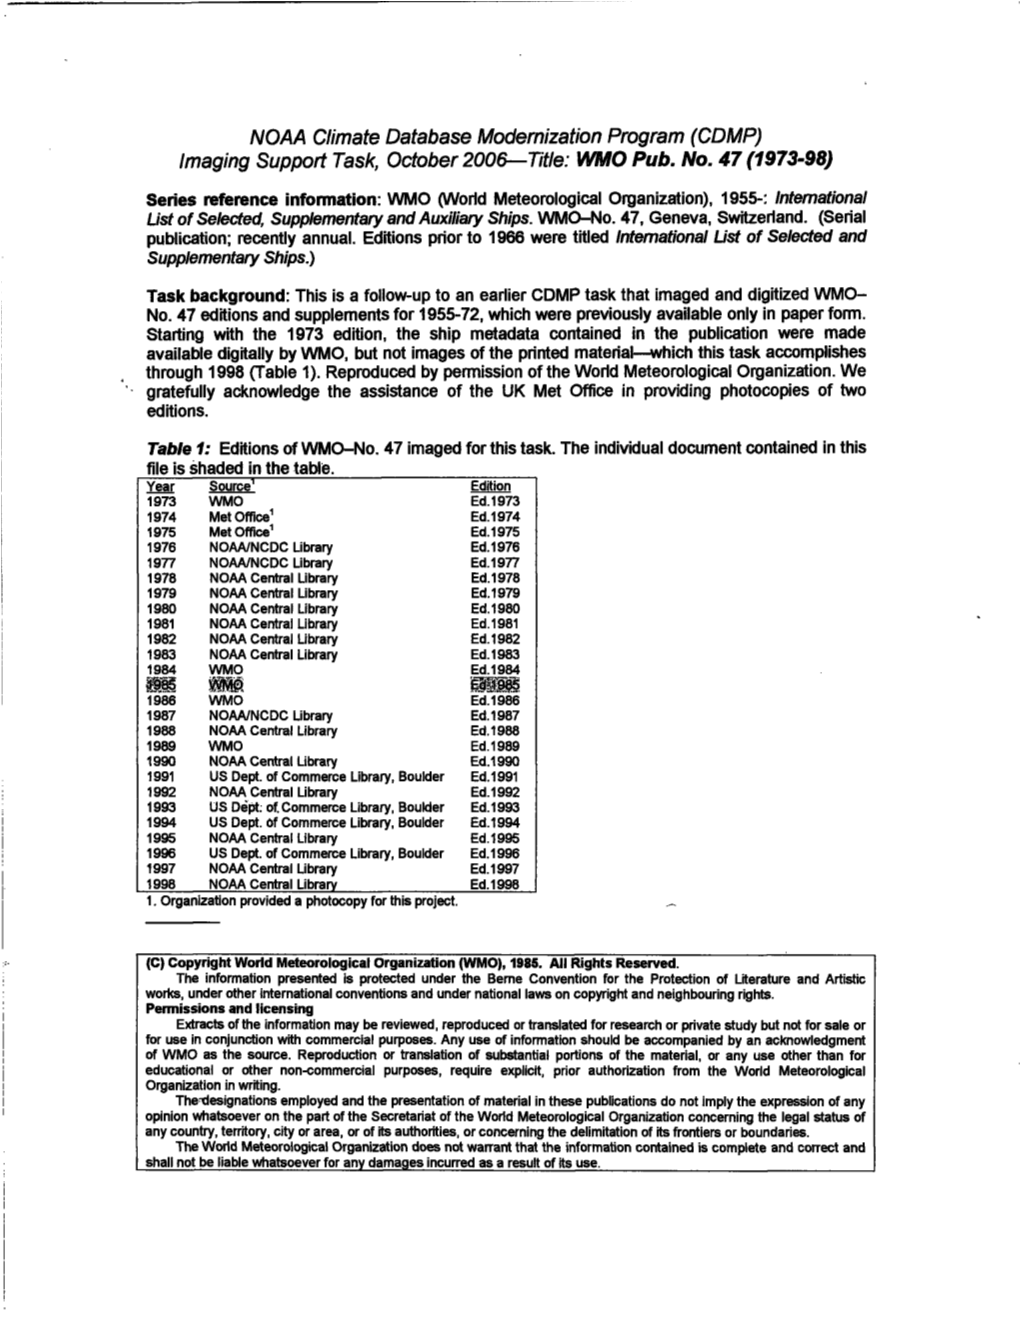 NOAA Climate Database Modernization Program (CDMP) Imaging Support Task, October 2006-Title: Wopub